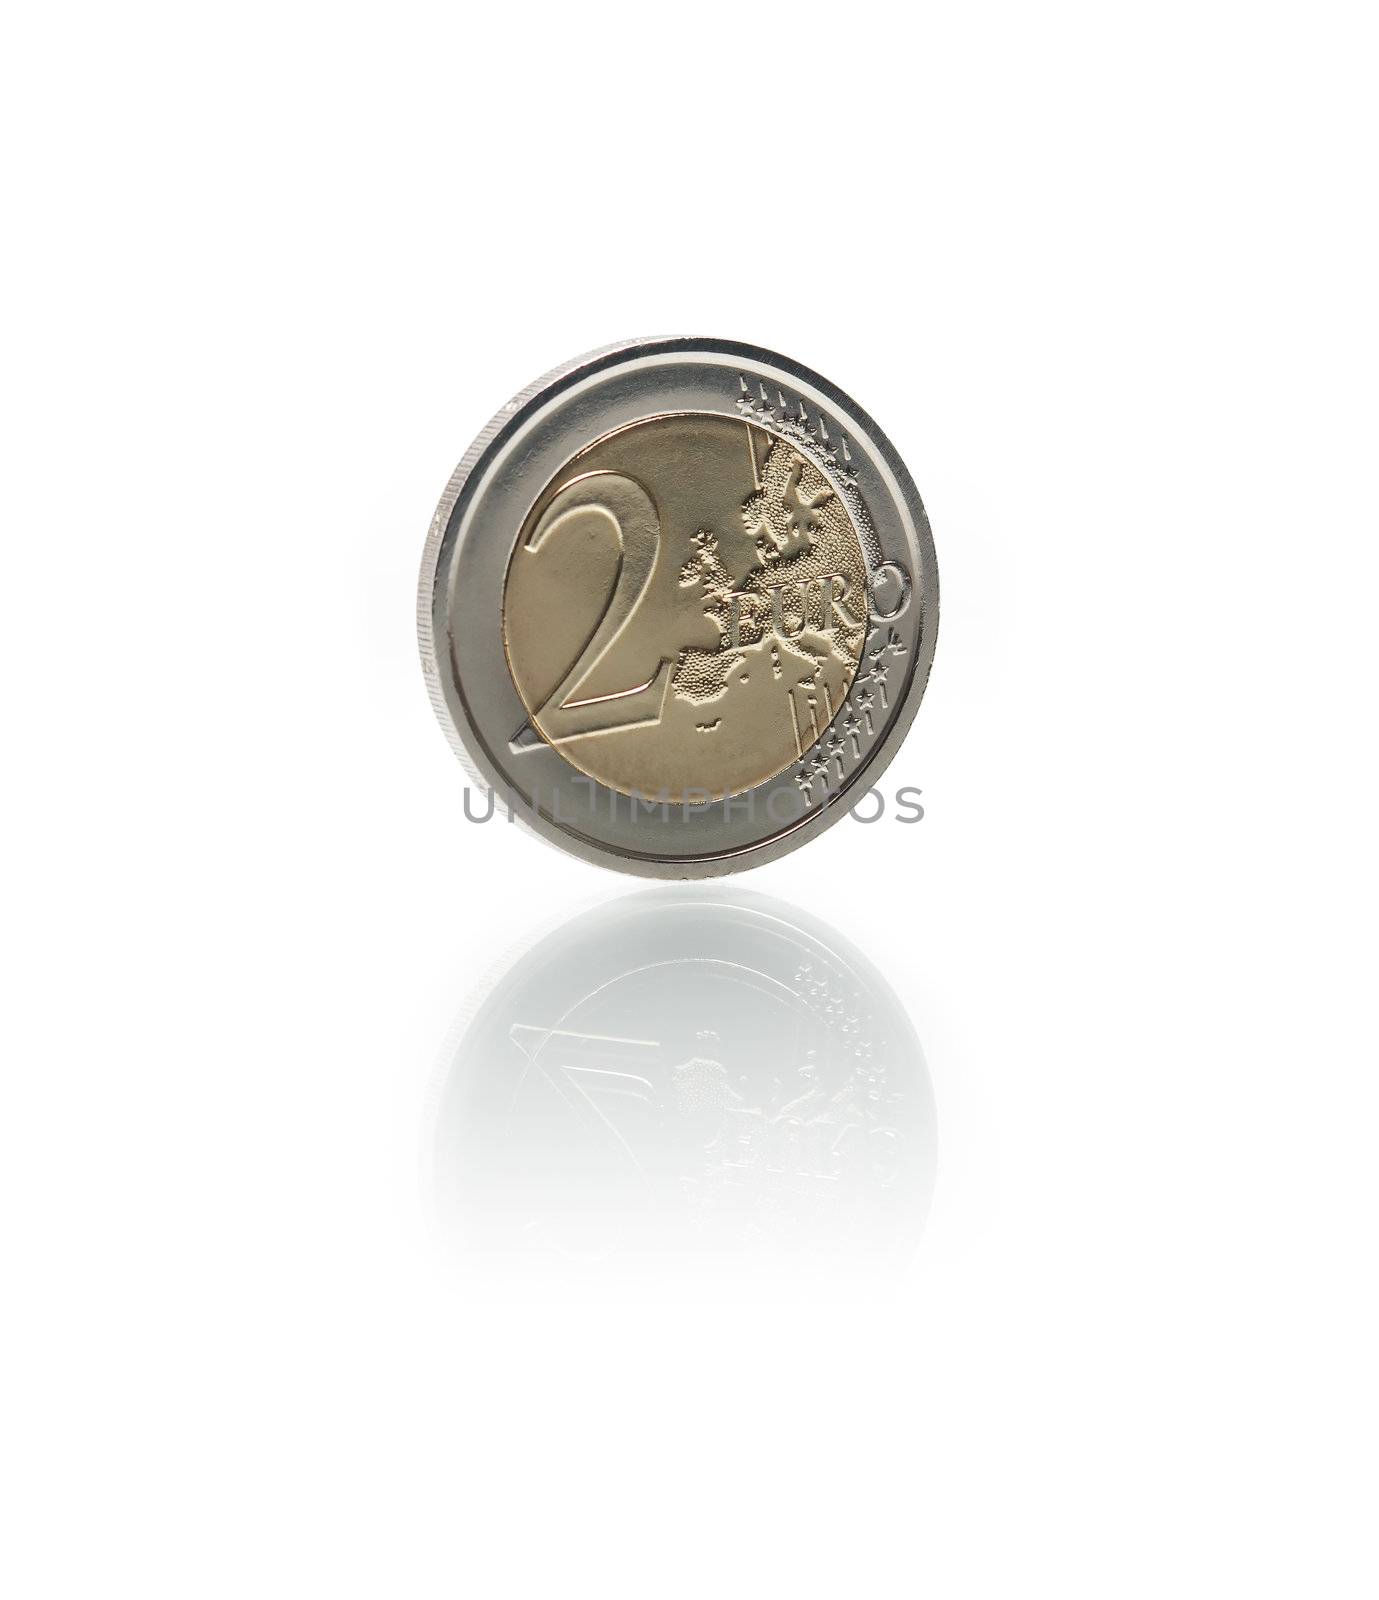 Two Euro Coin by kvkirillov